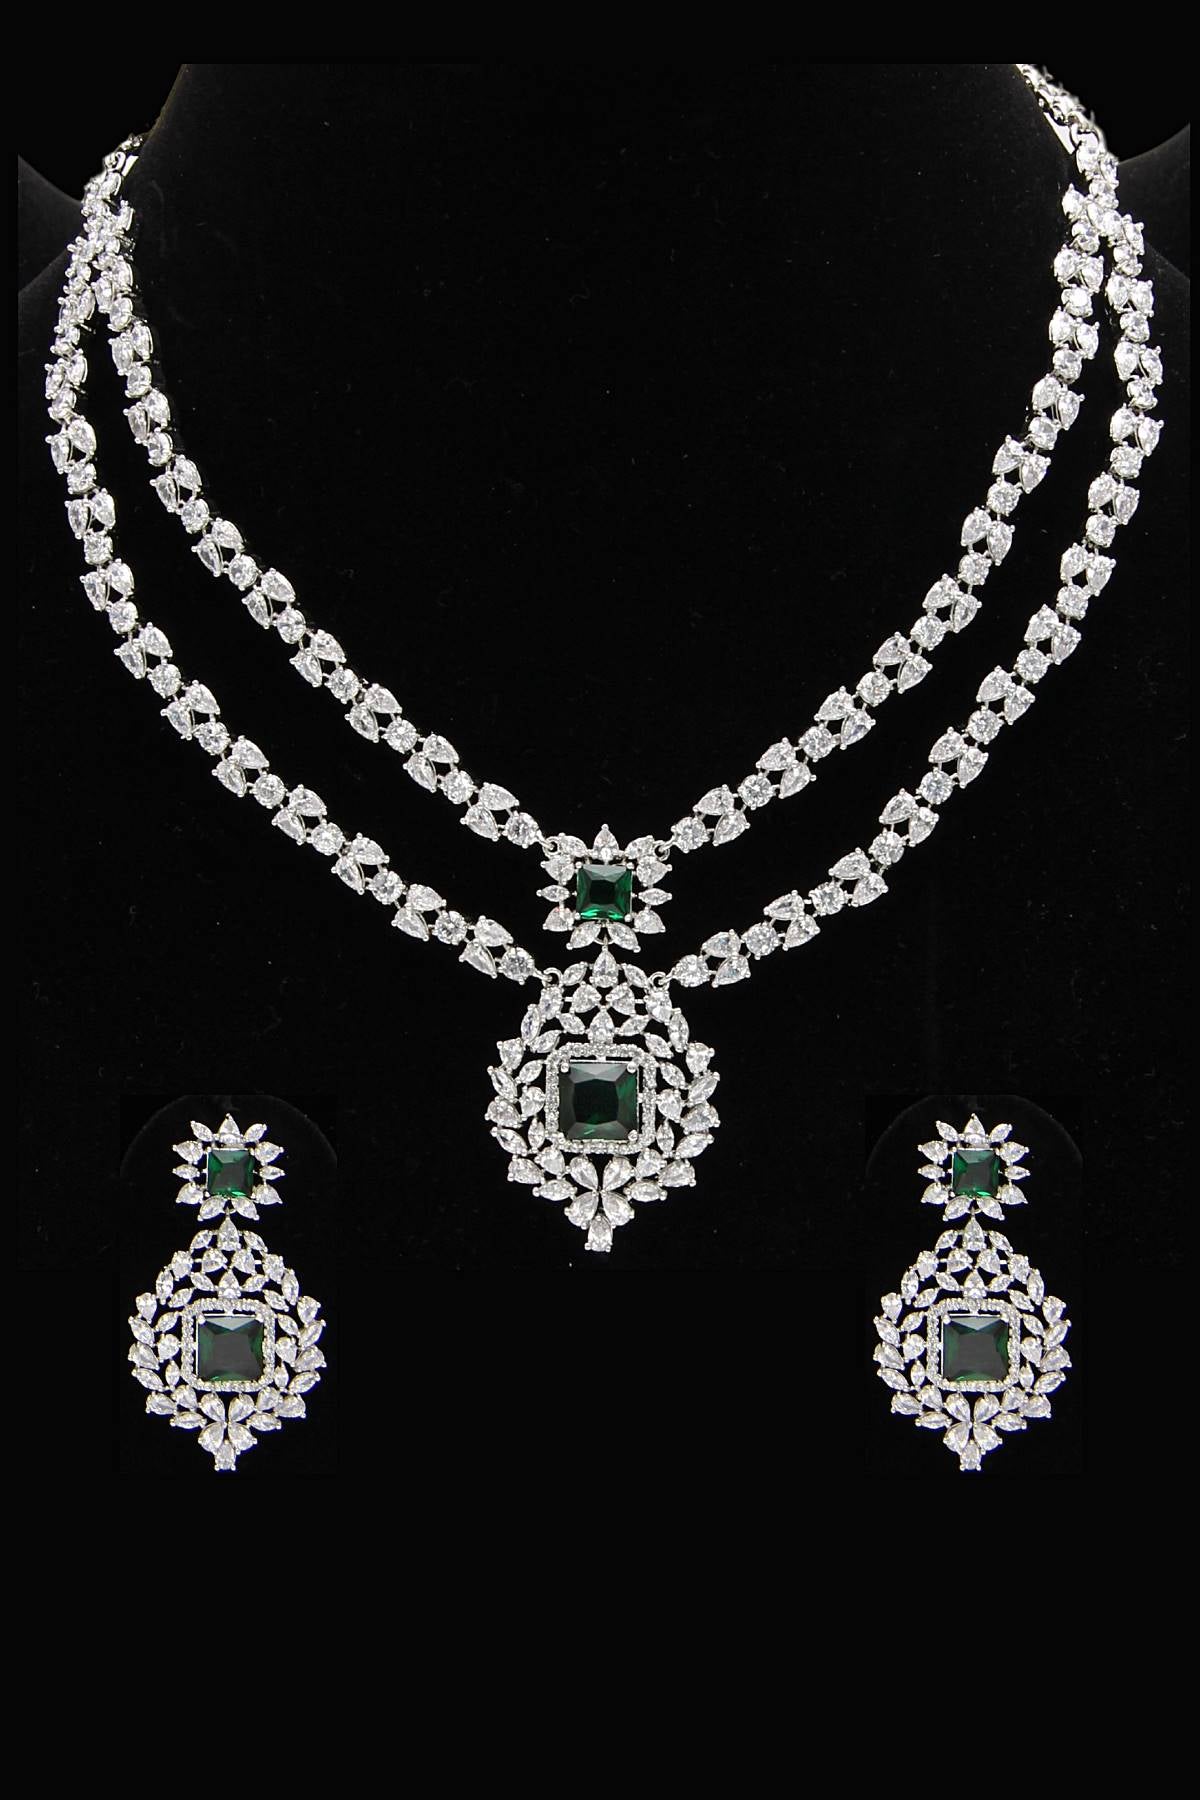 Layered American Diamonds Green Swarovski Cocktail Necklace Jewelry Set - Rent Jewels